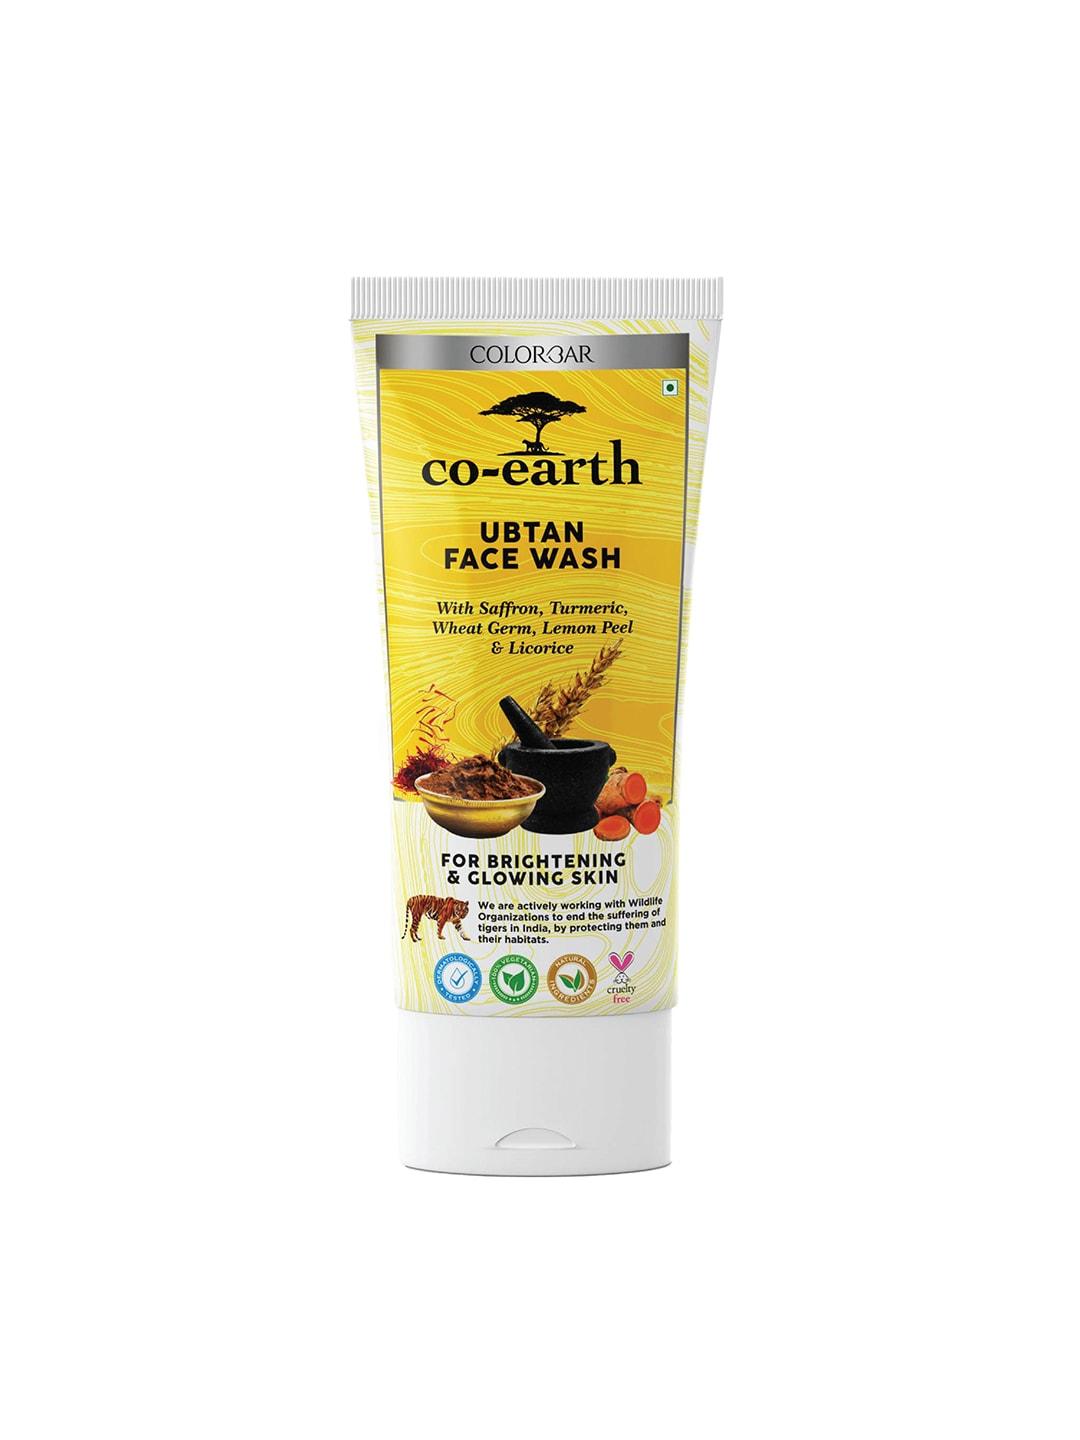 Colorbar Co-earth Ubtan Face Wash with Saffron & Turmeric - 100 ml